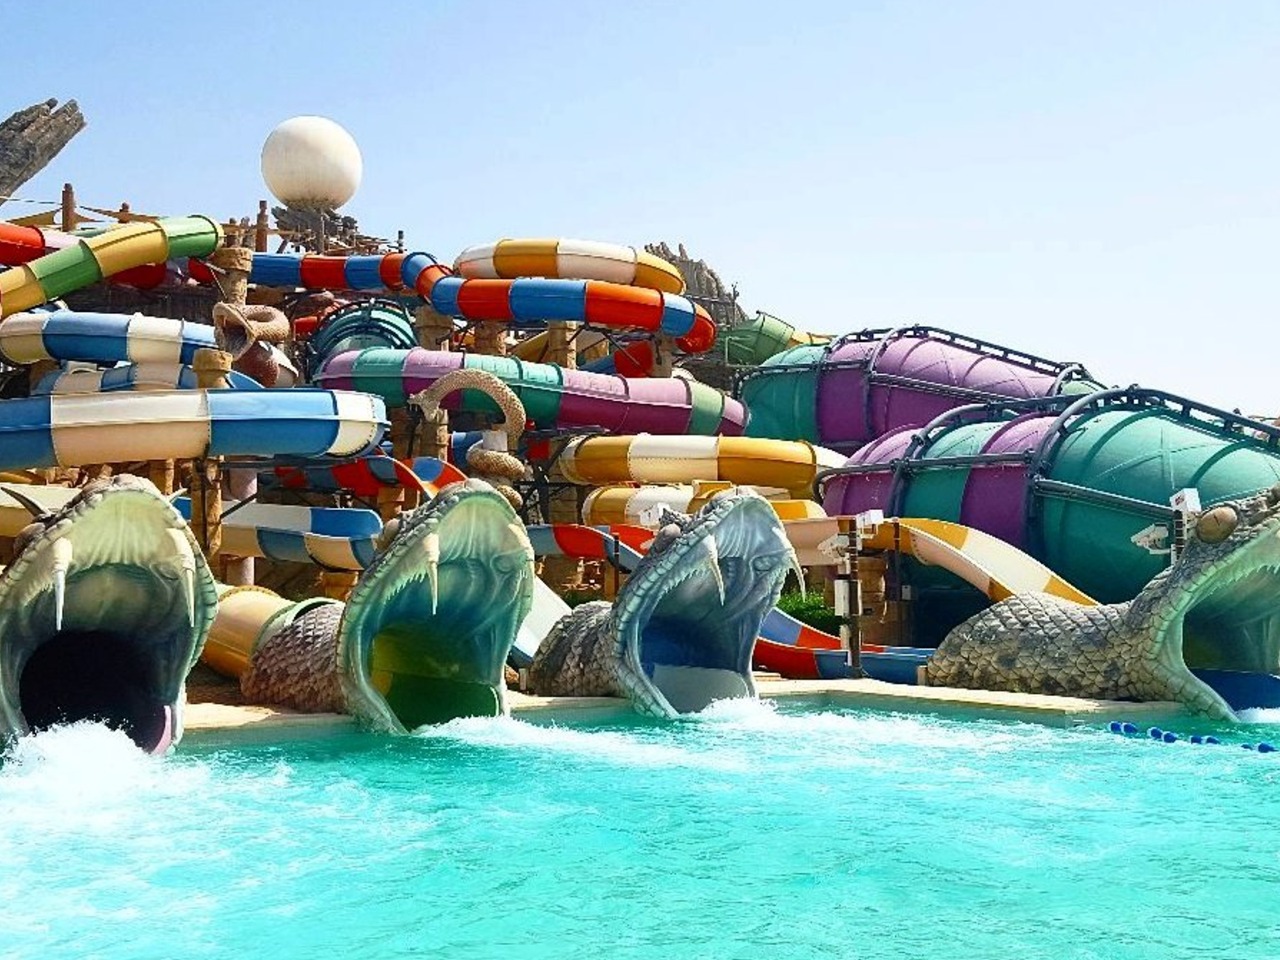 Аквапарк Yas Waterworld в Абу-Даби | Цена 75$, отзывы, описание экскурсии